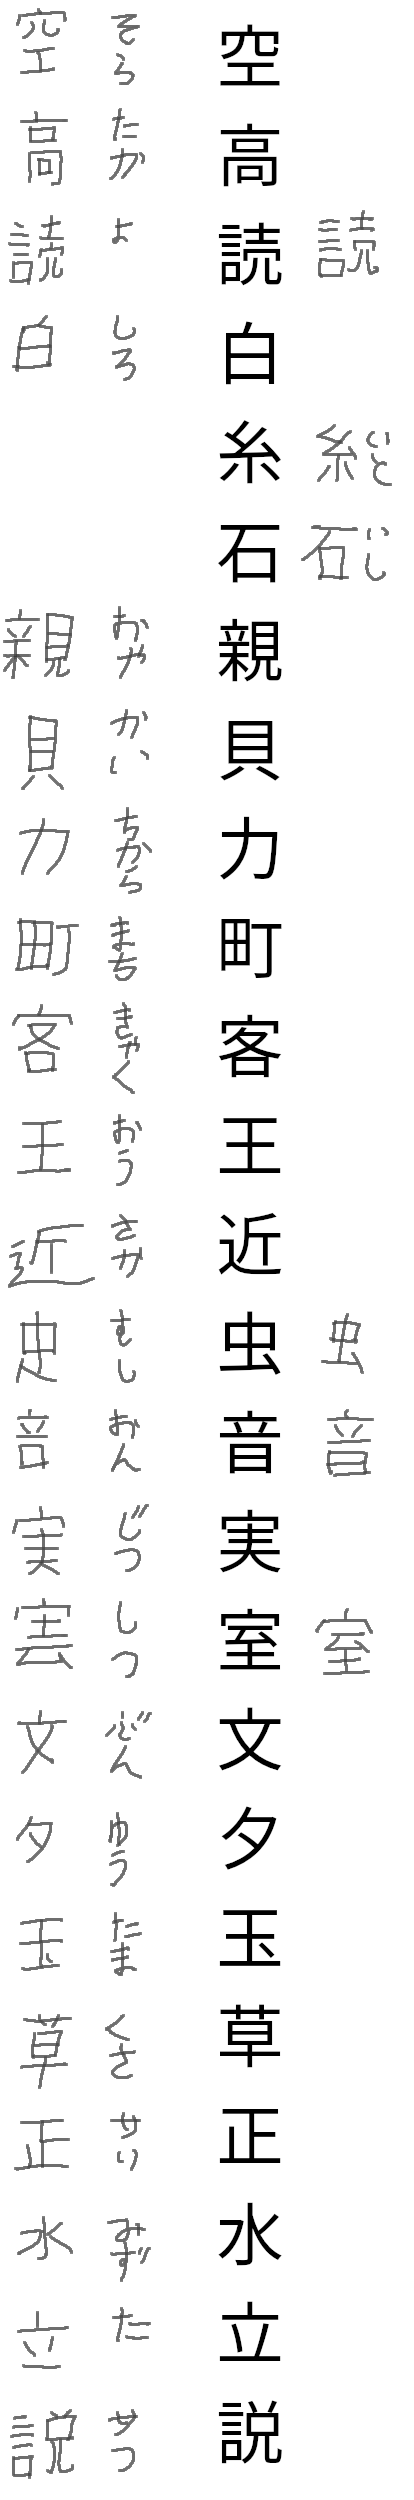 kanji test row 17